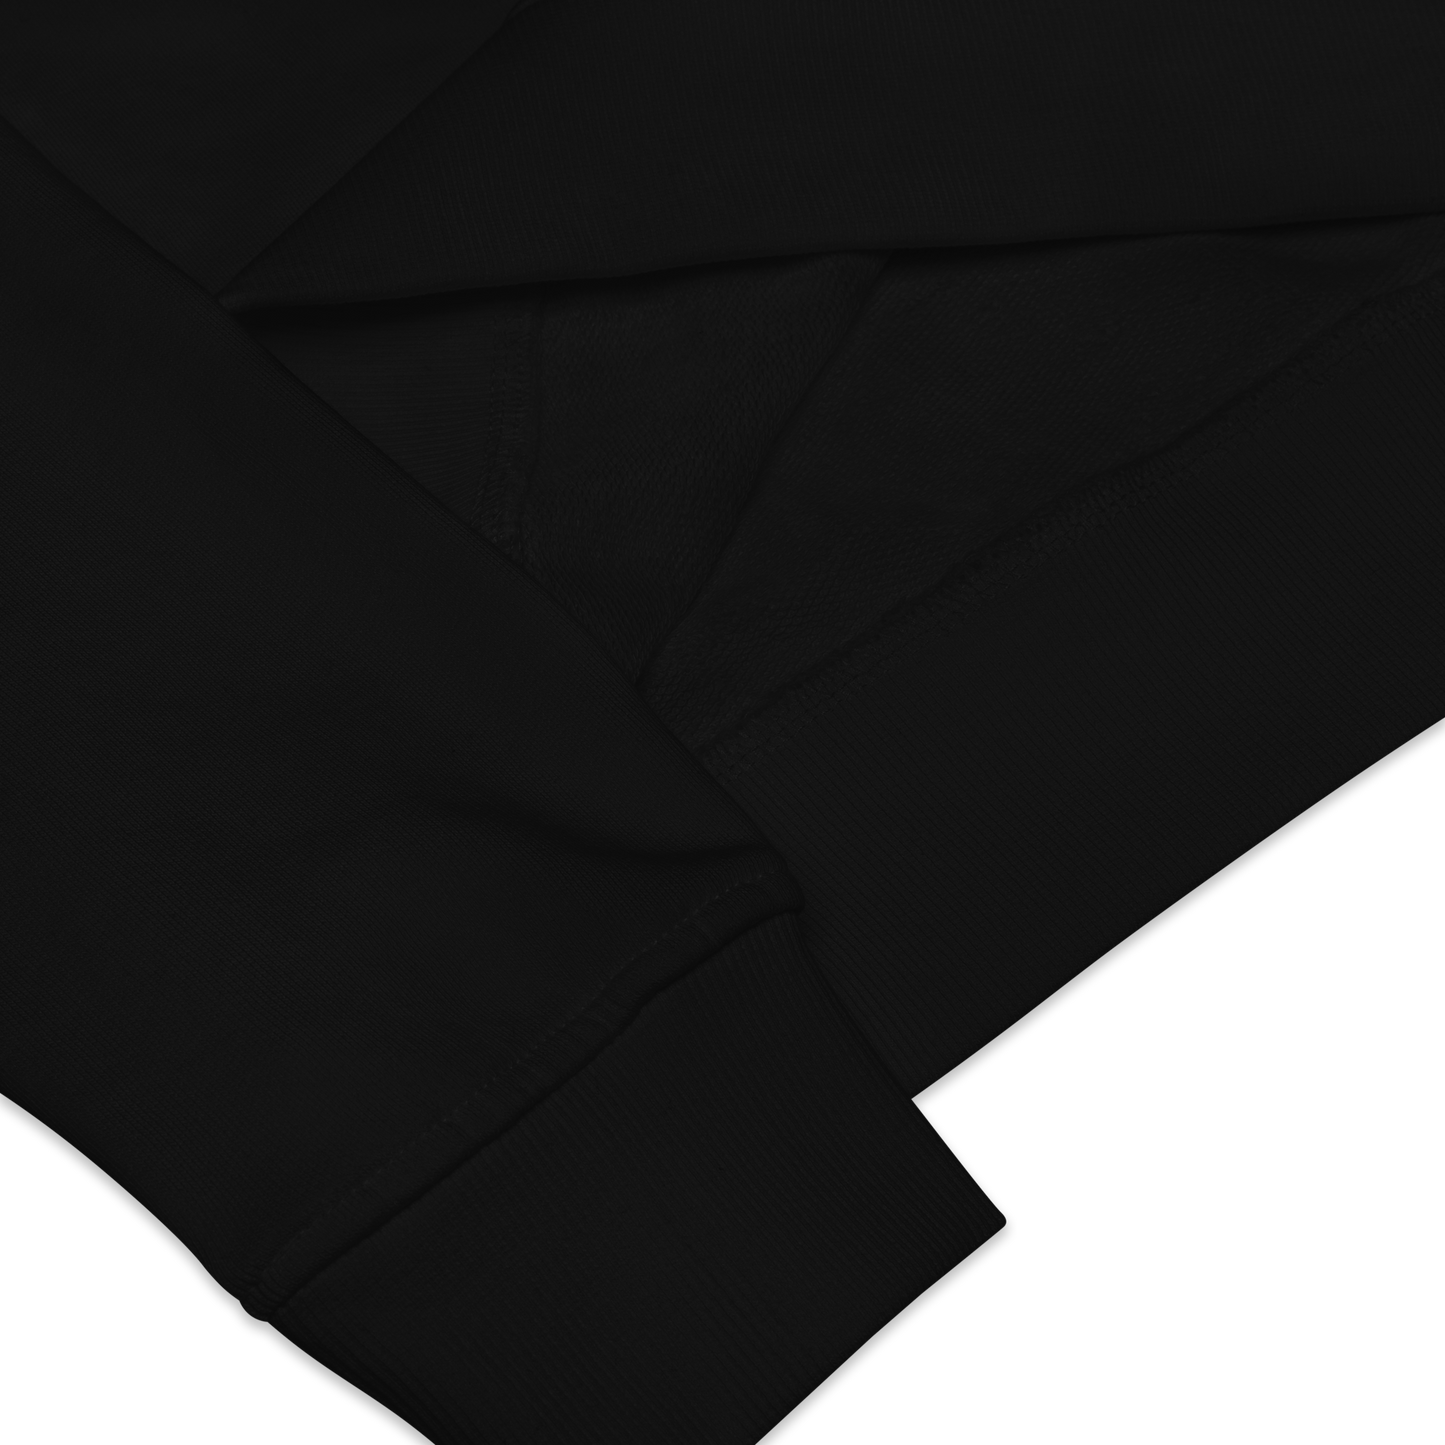 Sweatshirt - Discreet V1.0 - Black/ Navy - Standard